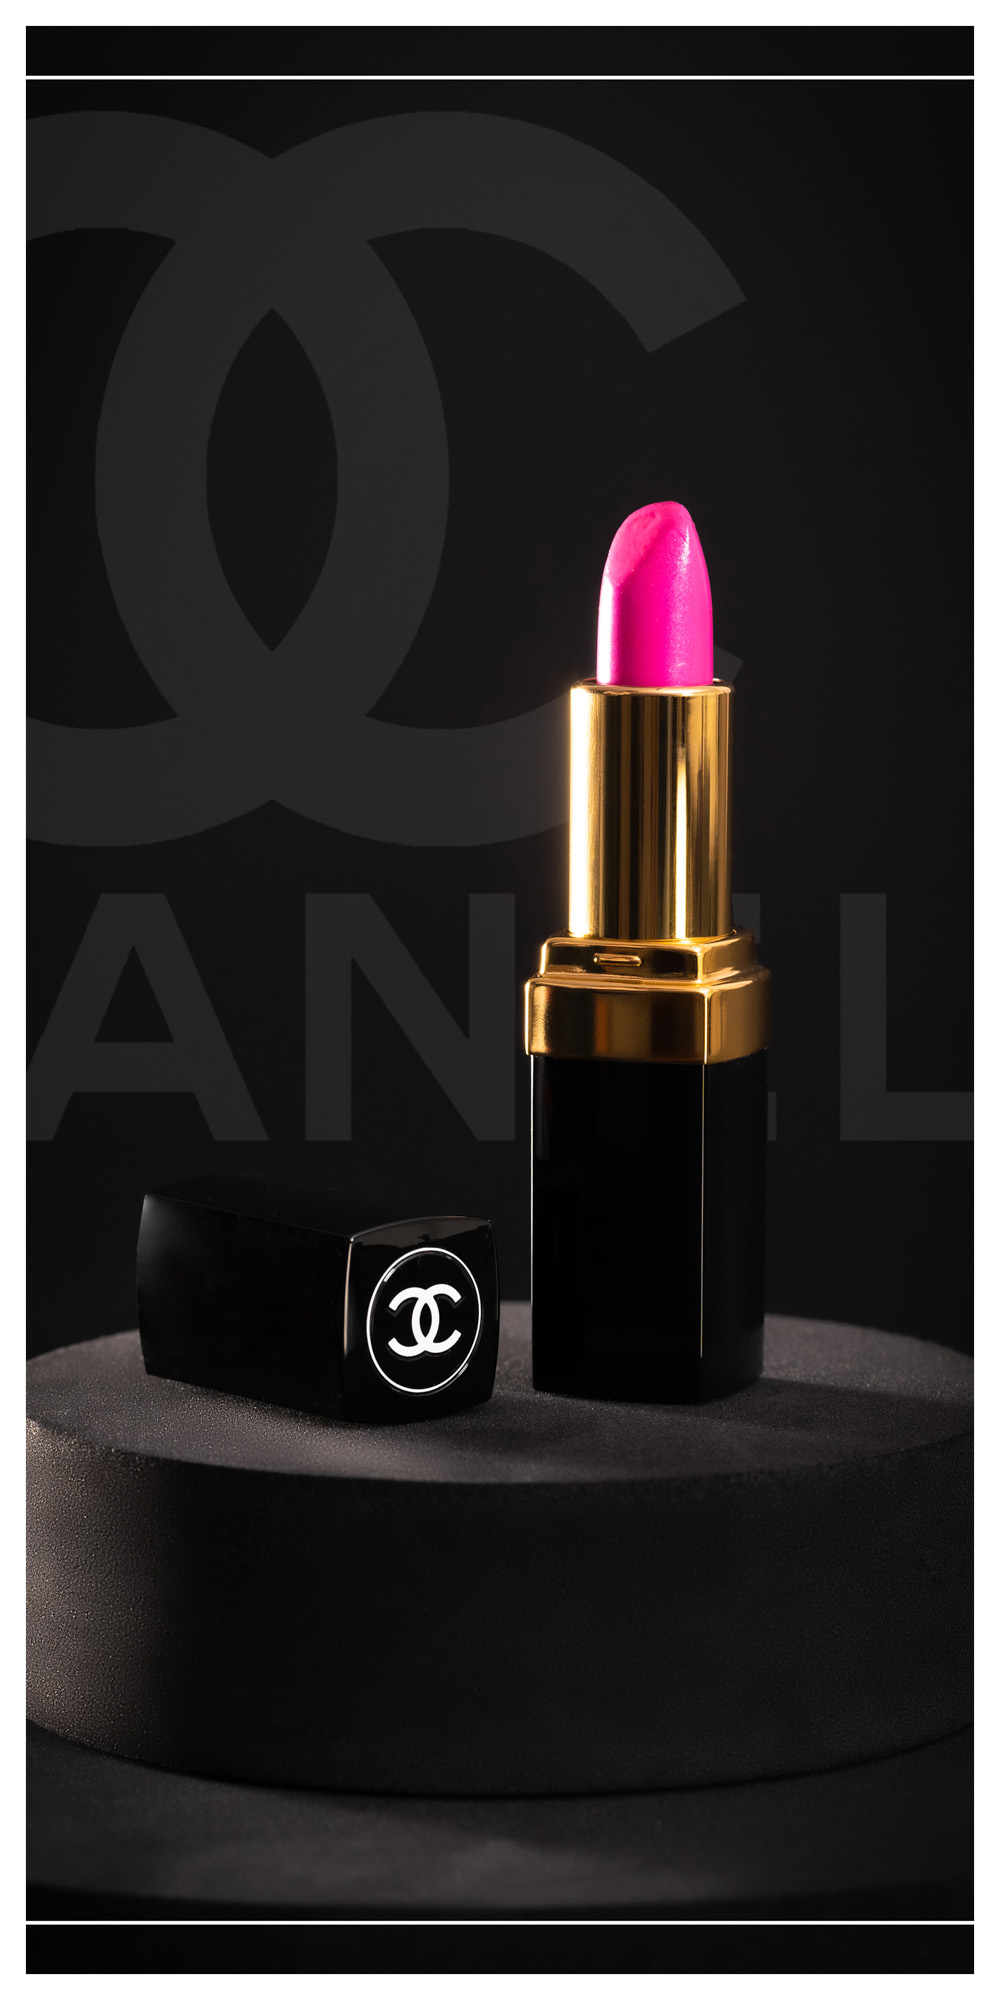 Chanel (Cosmetics) 1943 Gardenia Hand Soap, Lipstick, N°5